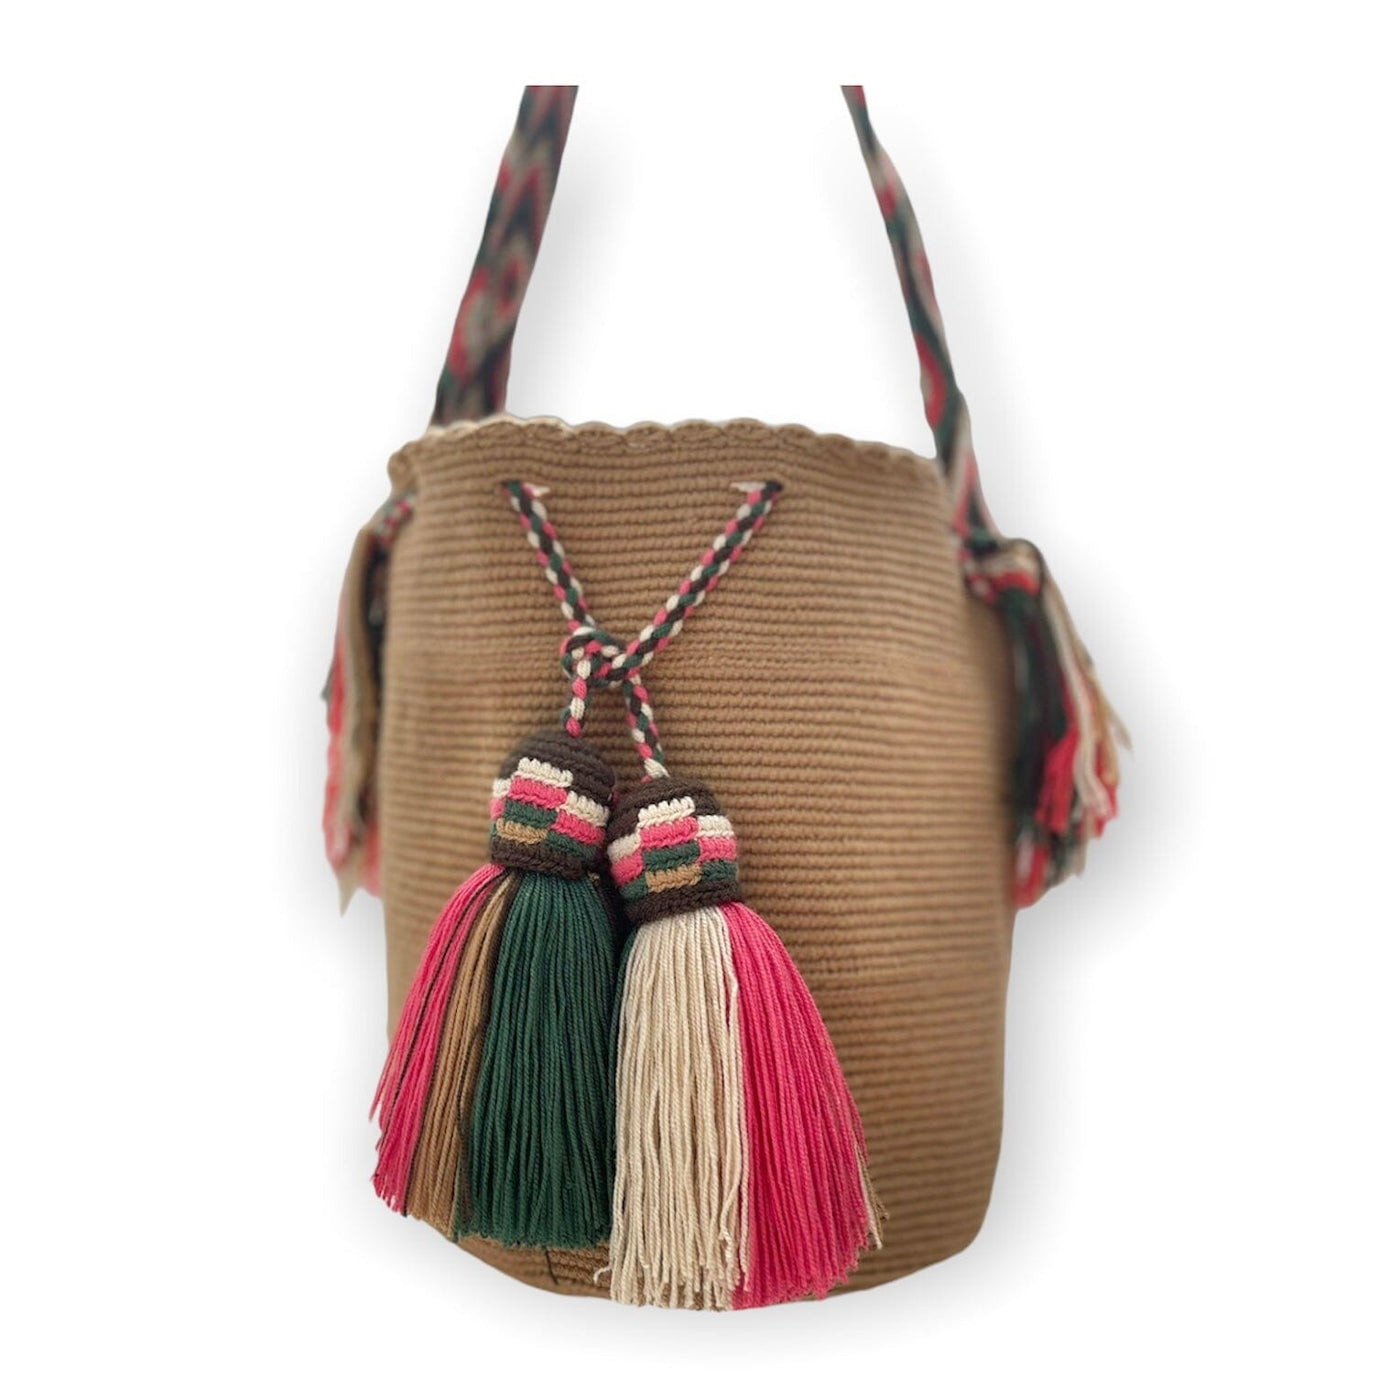 Desert Dreams Bohemian Handbags for Fall | Solid Earth Tones Crossbody Boho Bags | L Solid Color Crochet Bag - Crossbody/Shoulder Boho Bag Camel / Tan - Desert Dreams 